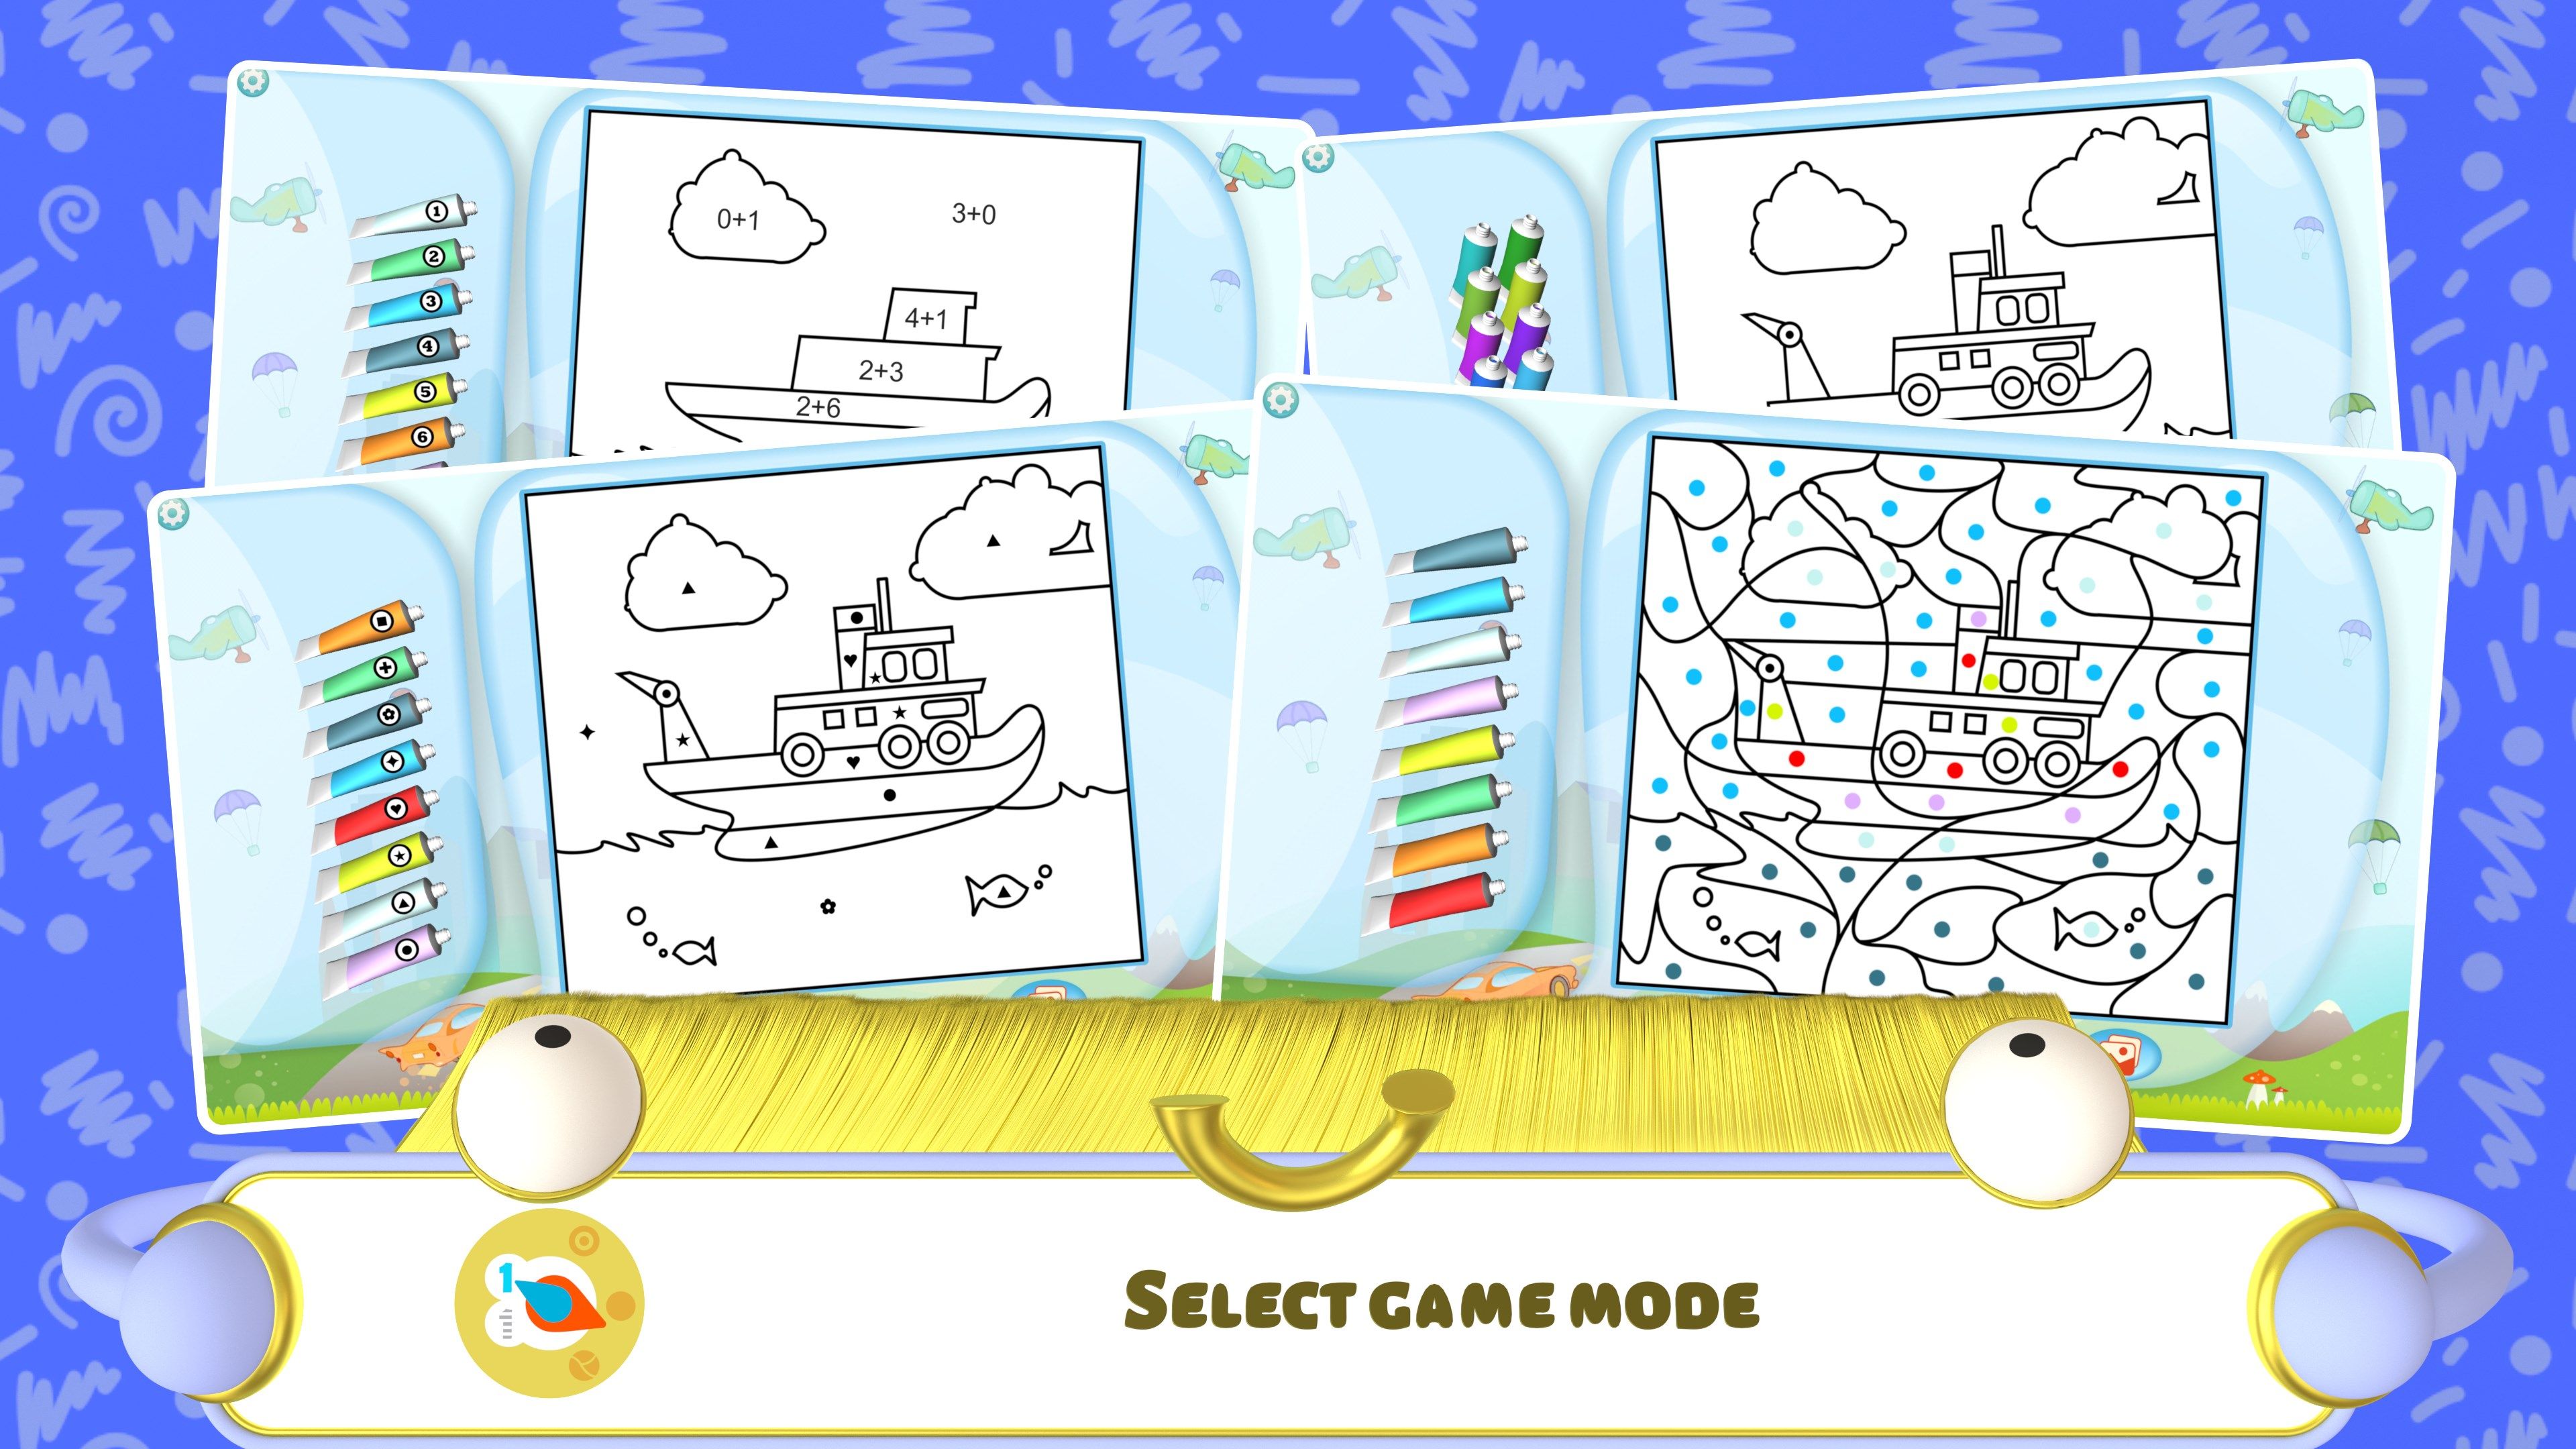 Select game mode